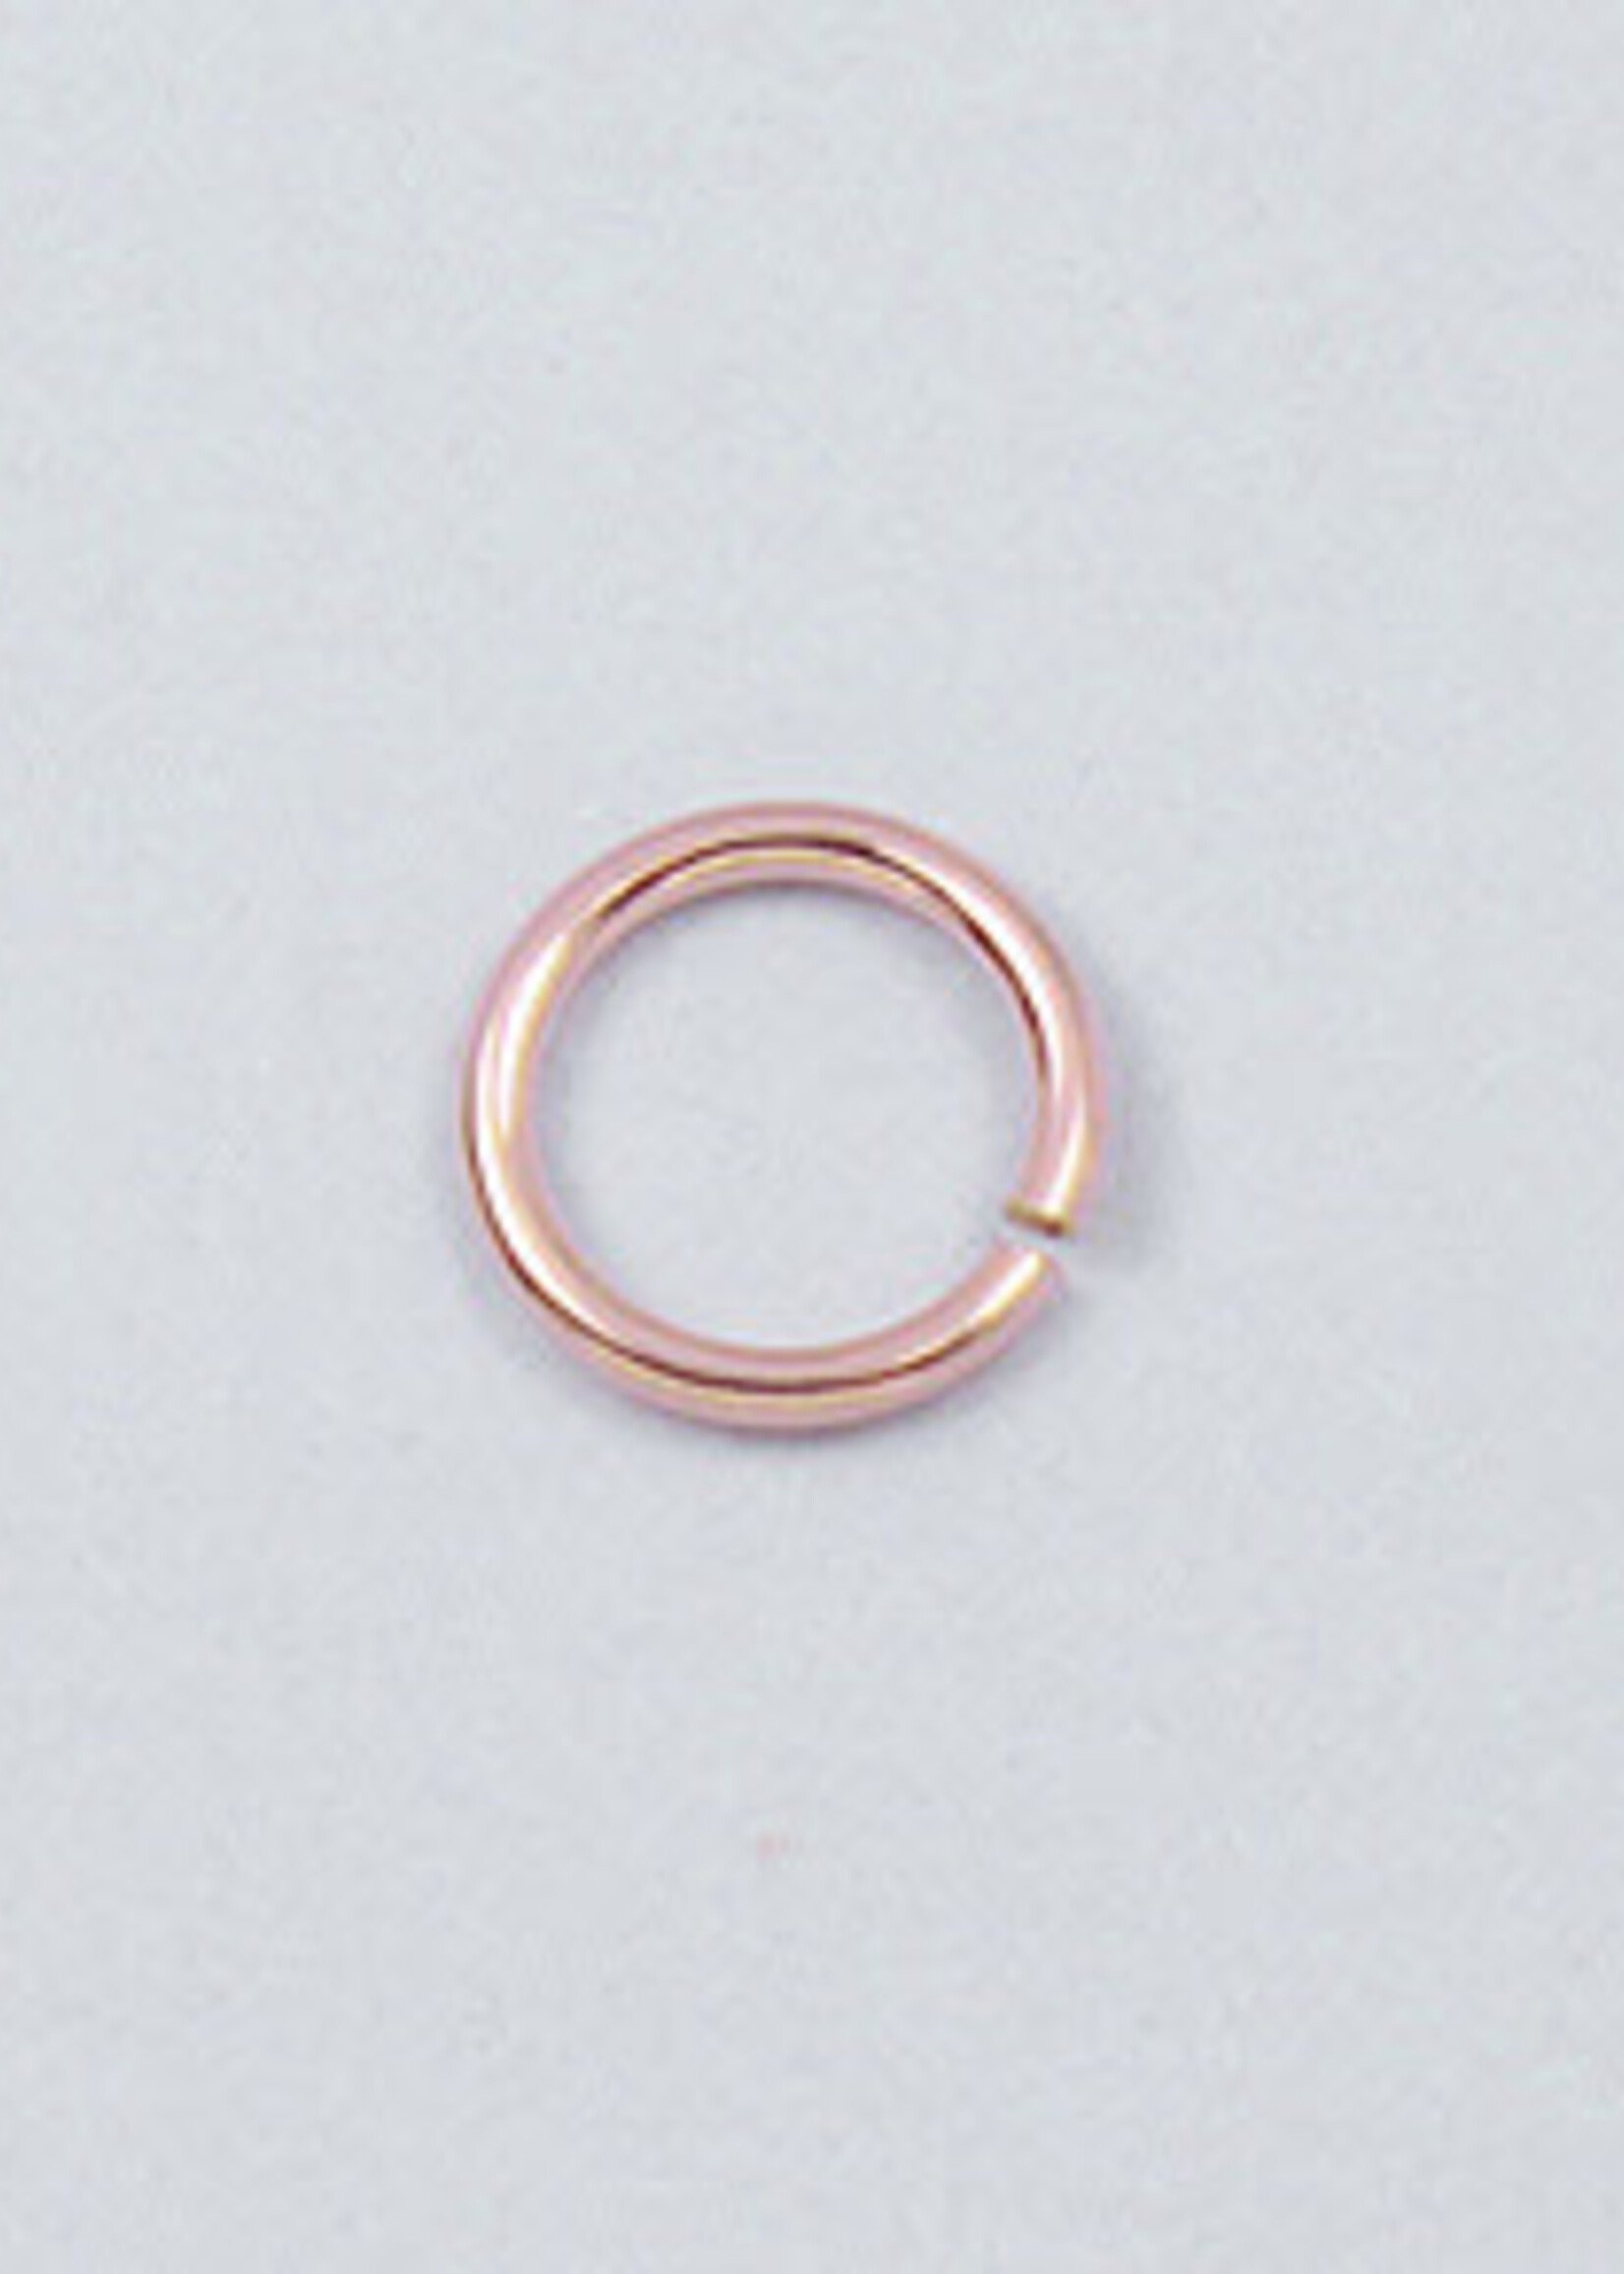 5mm Jump Rings 22ga 14k Rose Gold Filled Qty10